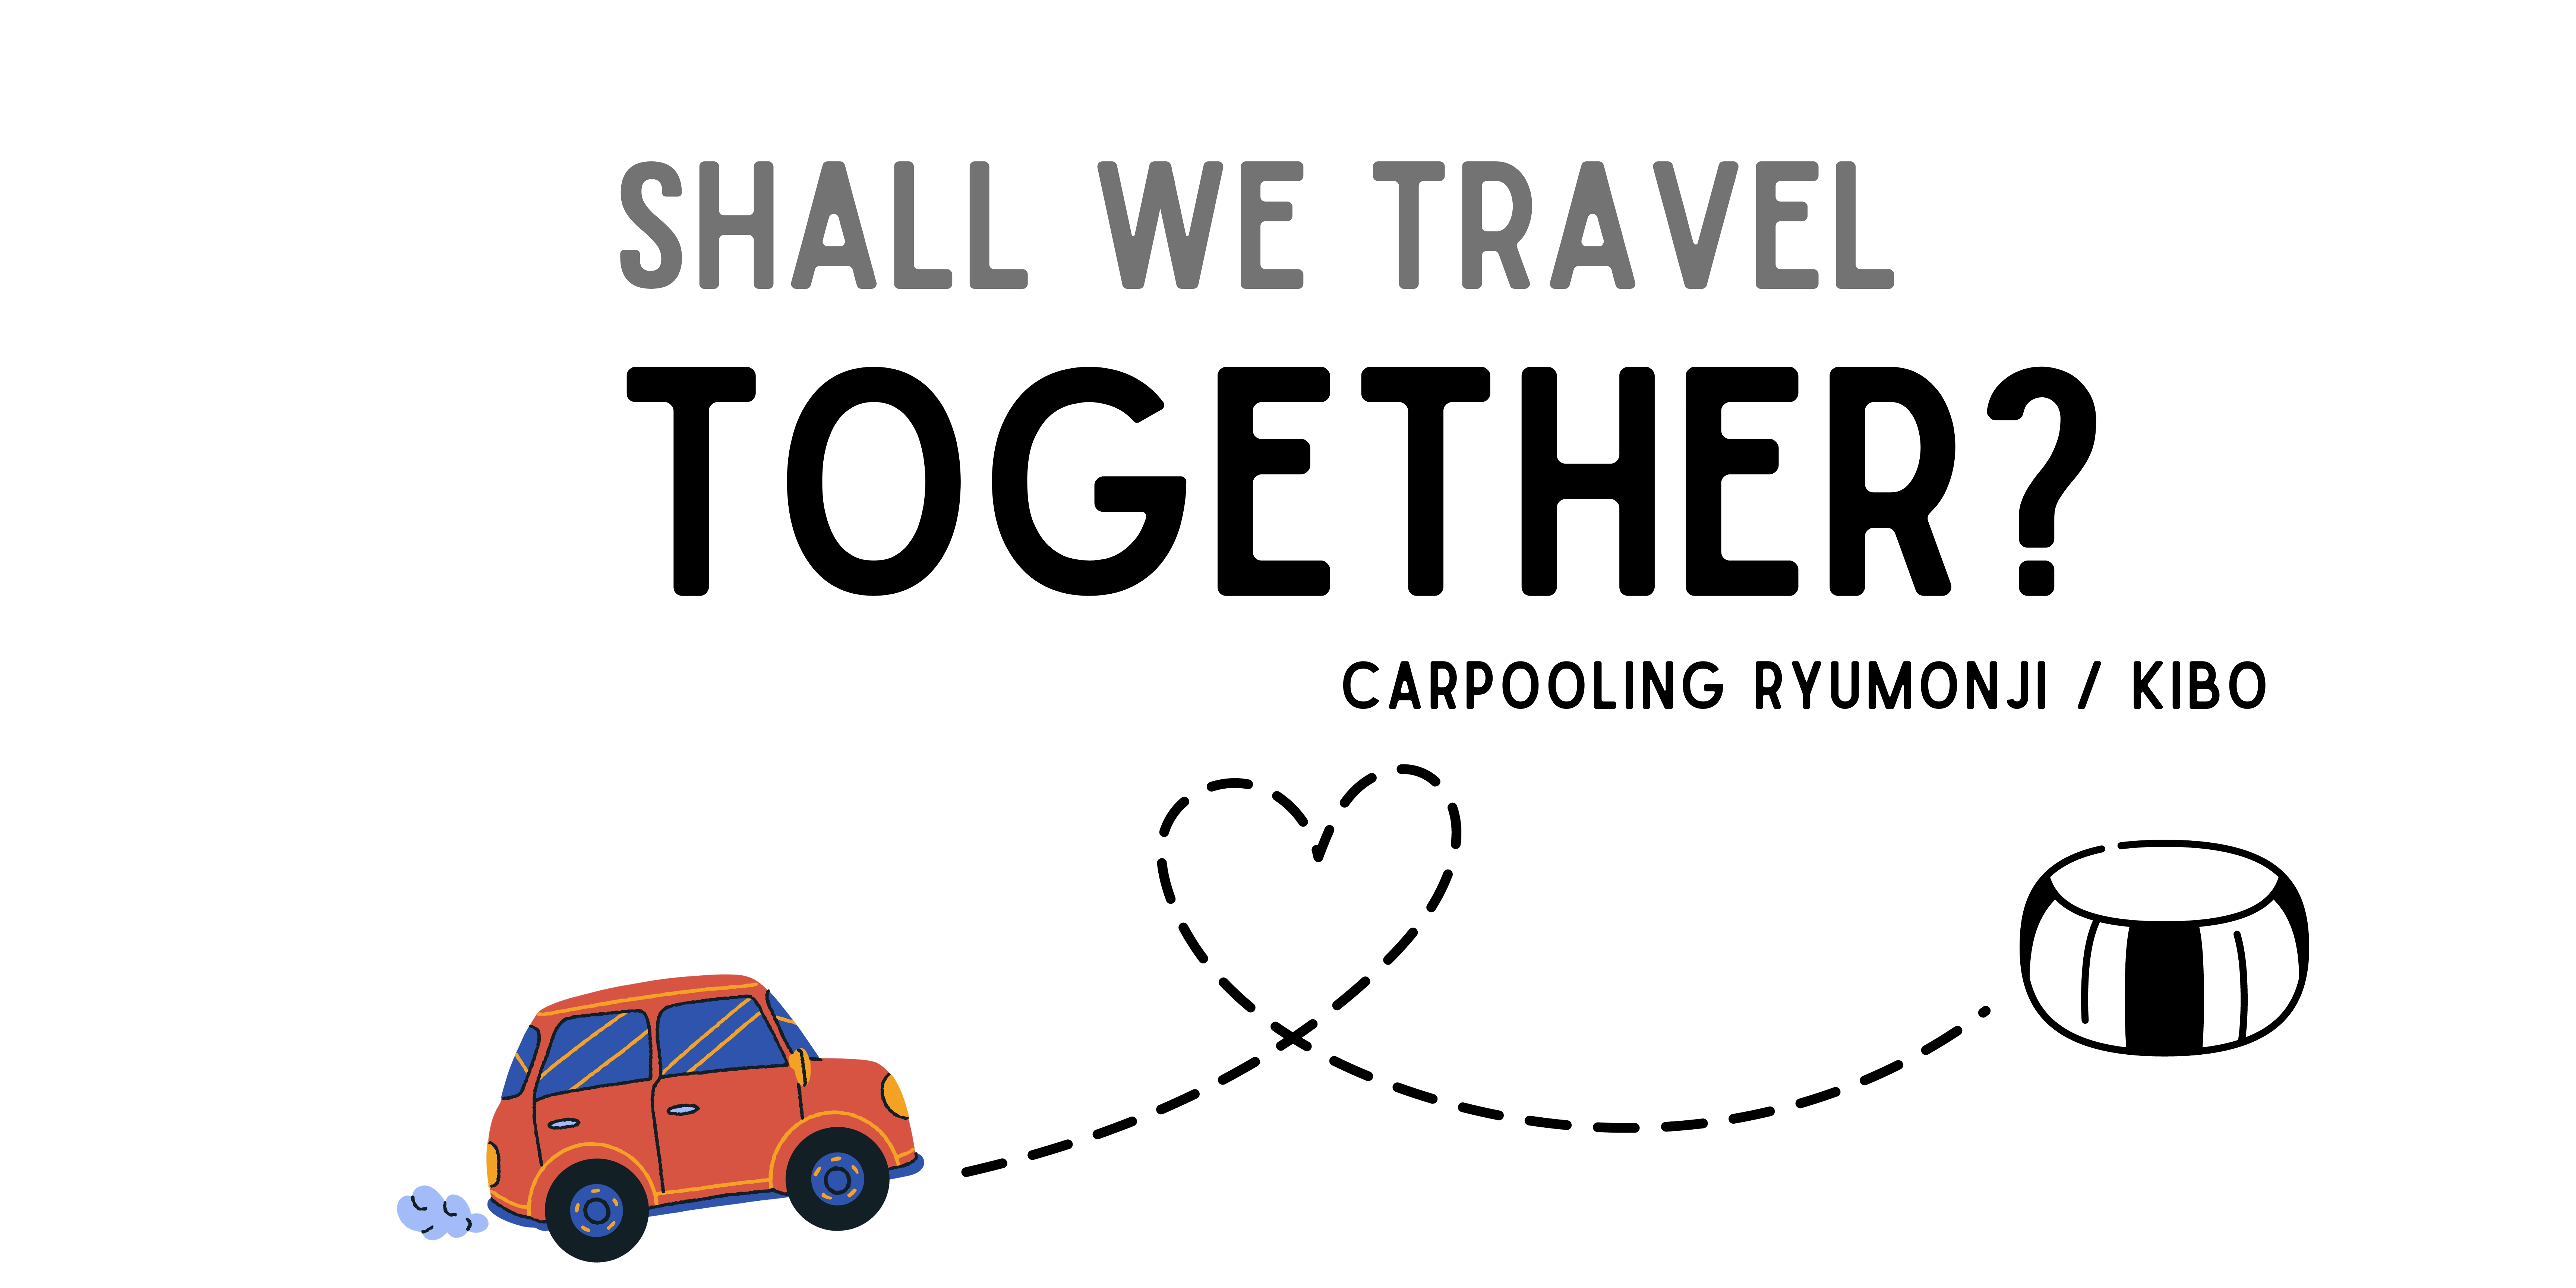 Carpooling Ryumonji / Kibo